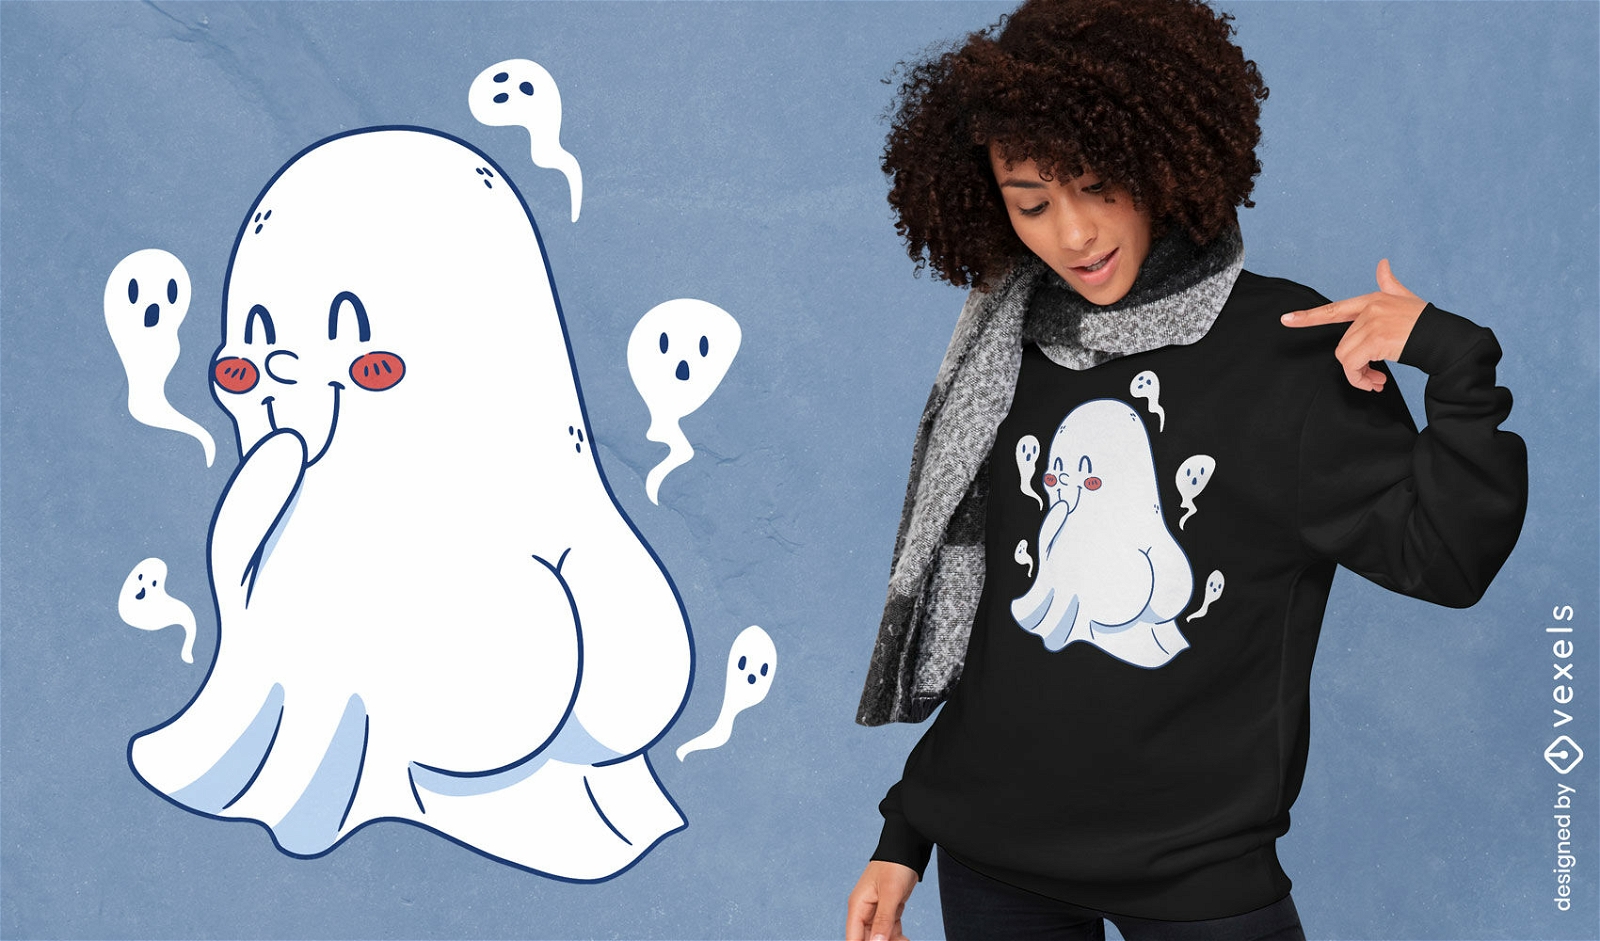 Funny ghost cartoon t-shirt design